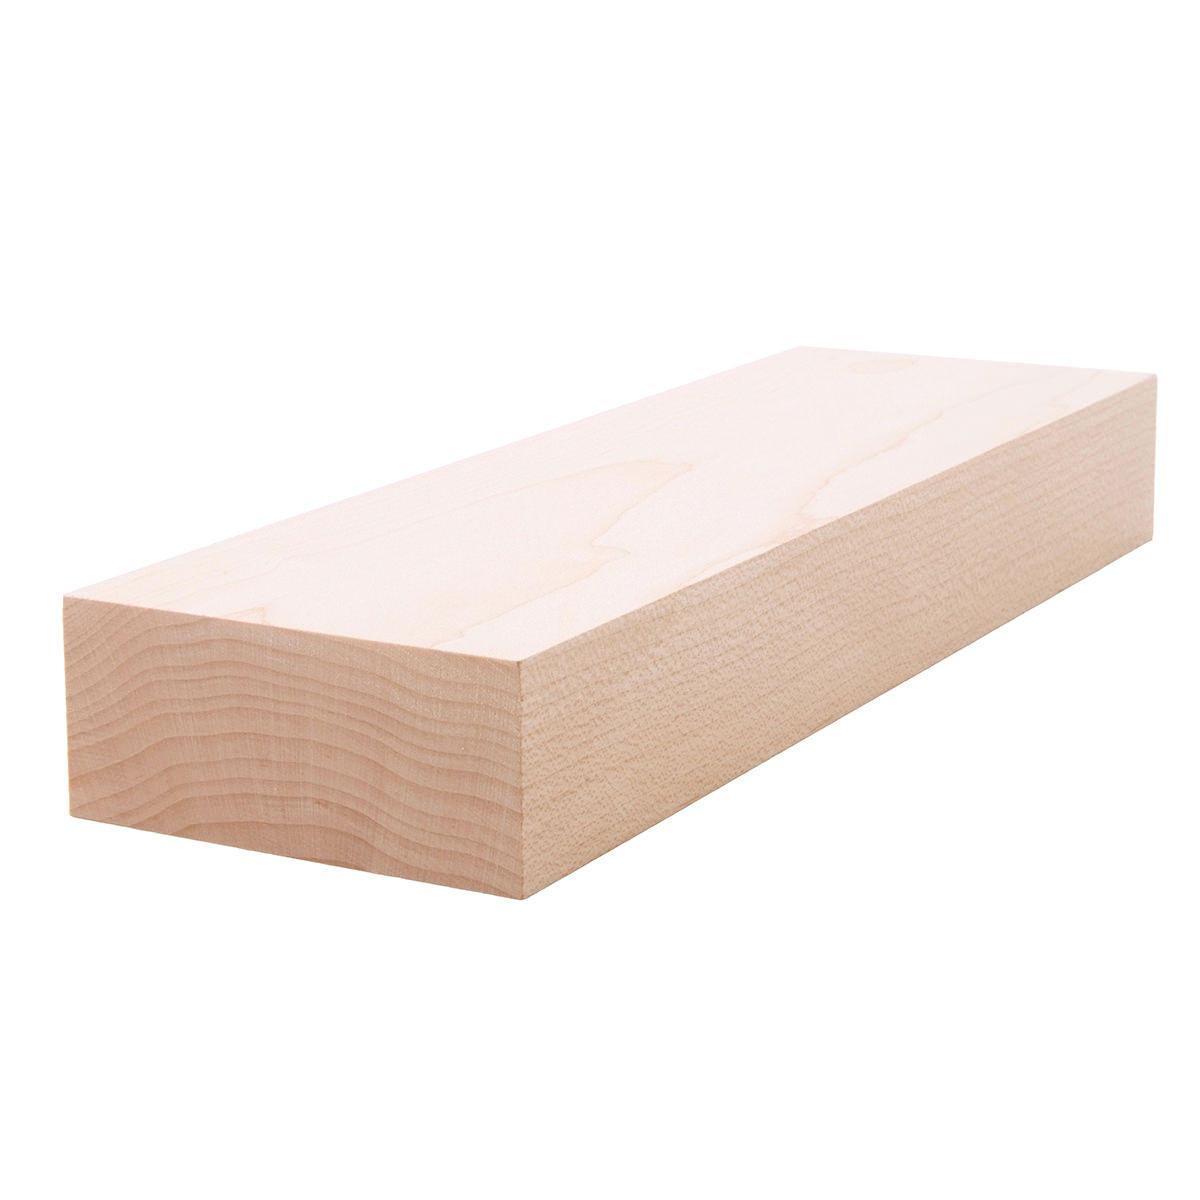 2 Maple Boards 1-1/2" x 3-1/2" Hard Maple Lumber 2x4